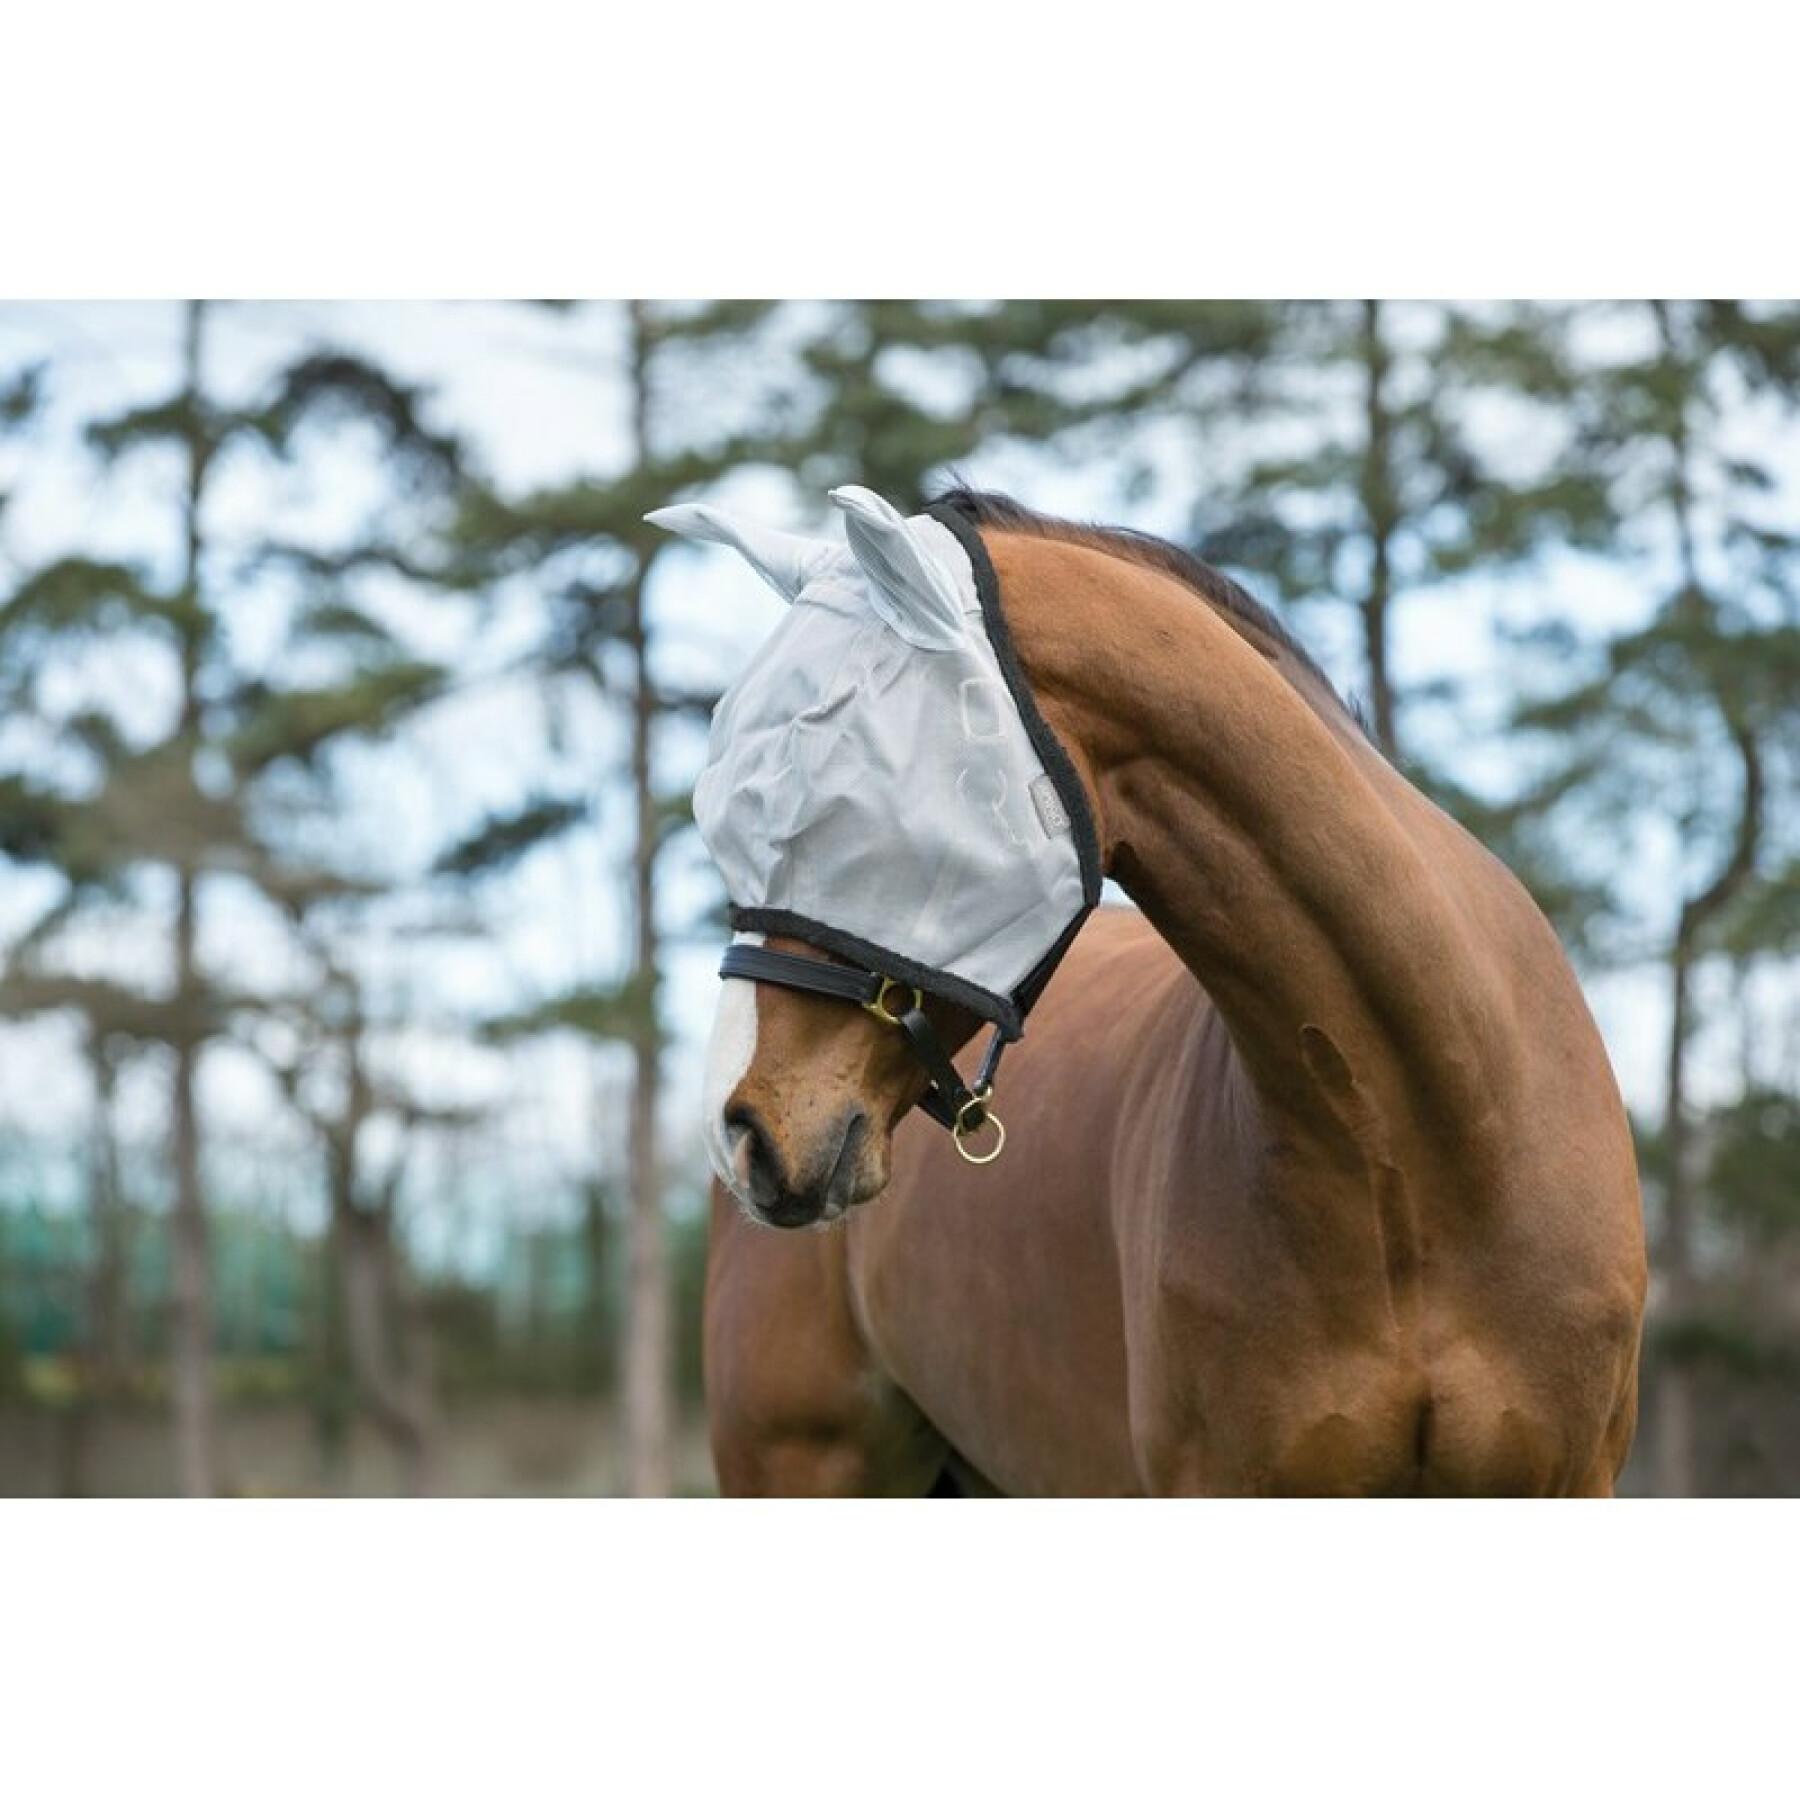 Masque anti-mouches pour cheval Horseware Amigo